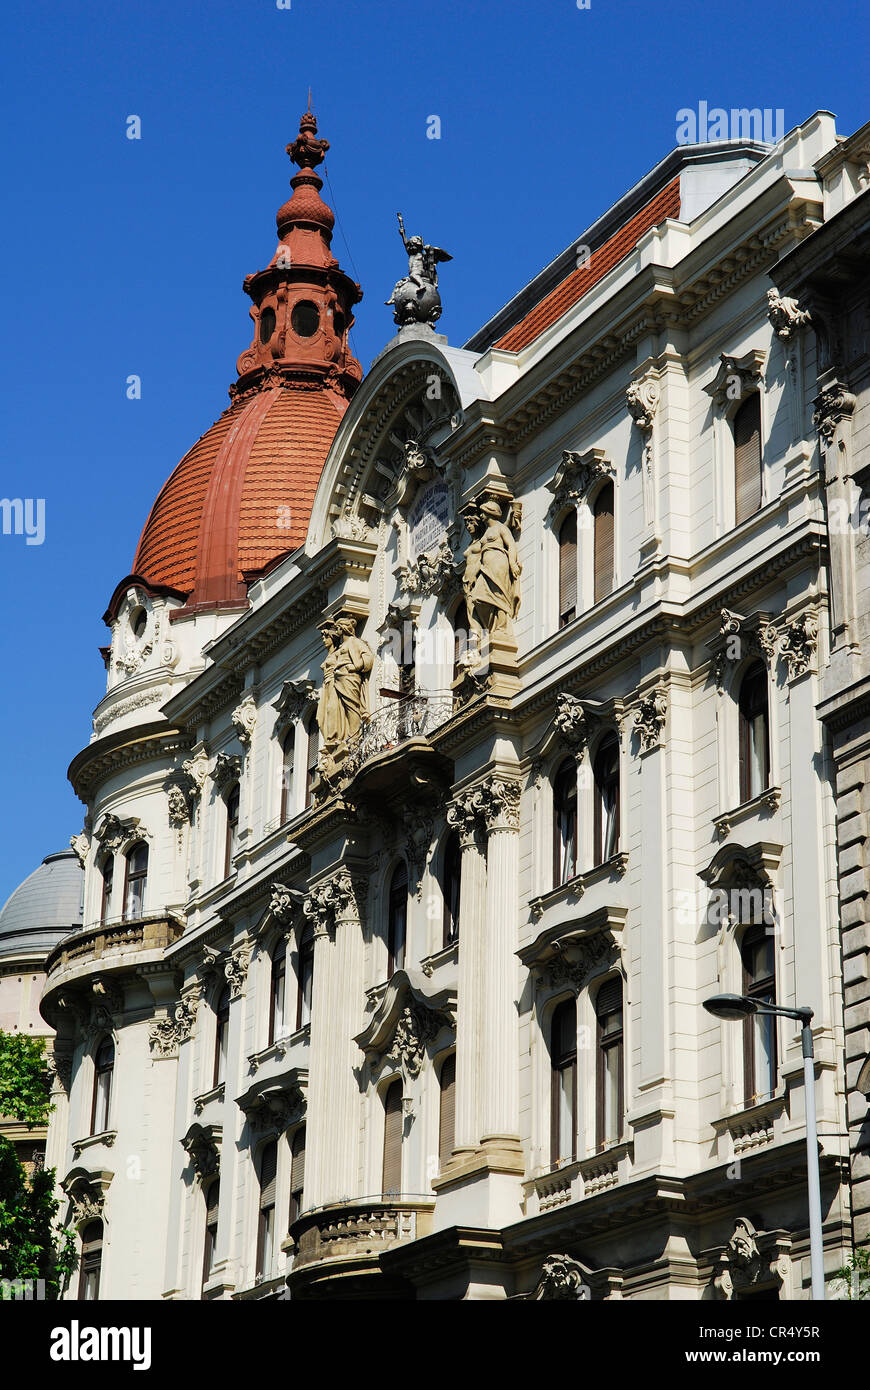 Hungary, Budapest, UNESCO World Heritage, art nouveau building in Alkotmány útca Stock Photo